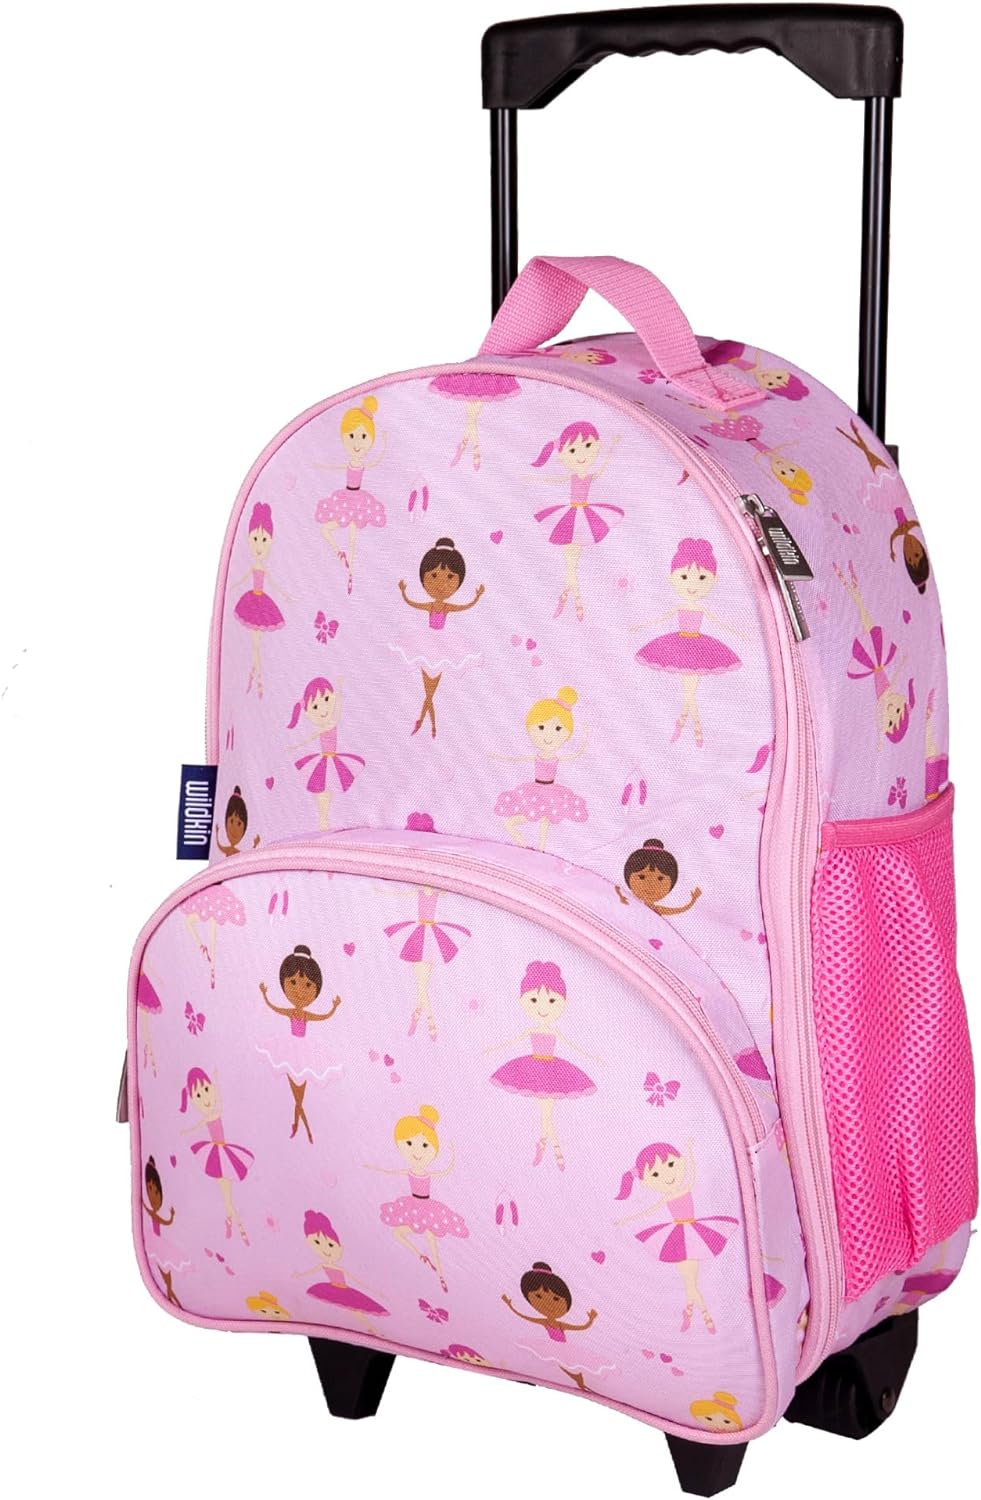 9. Wildkin Kids Rolling Backpack Soft-Side Luggage